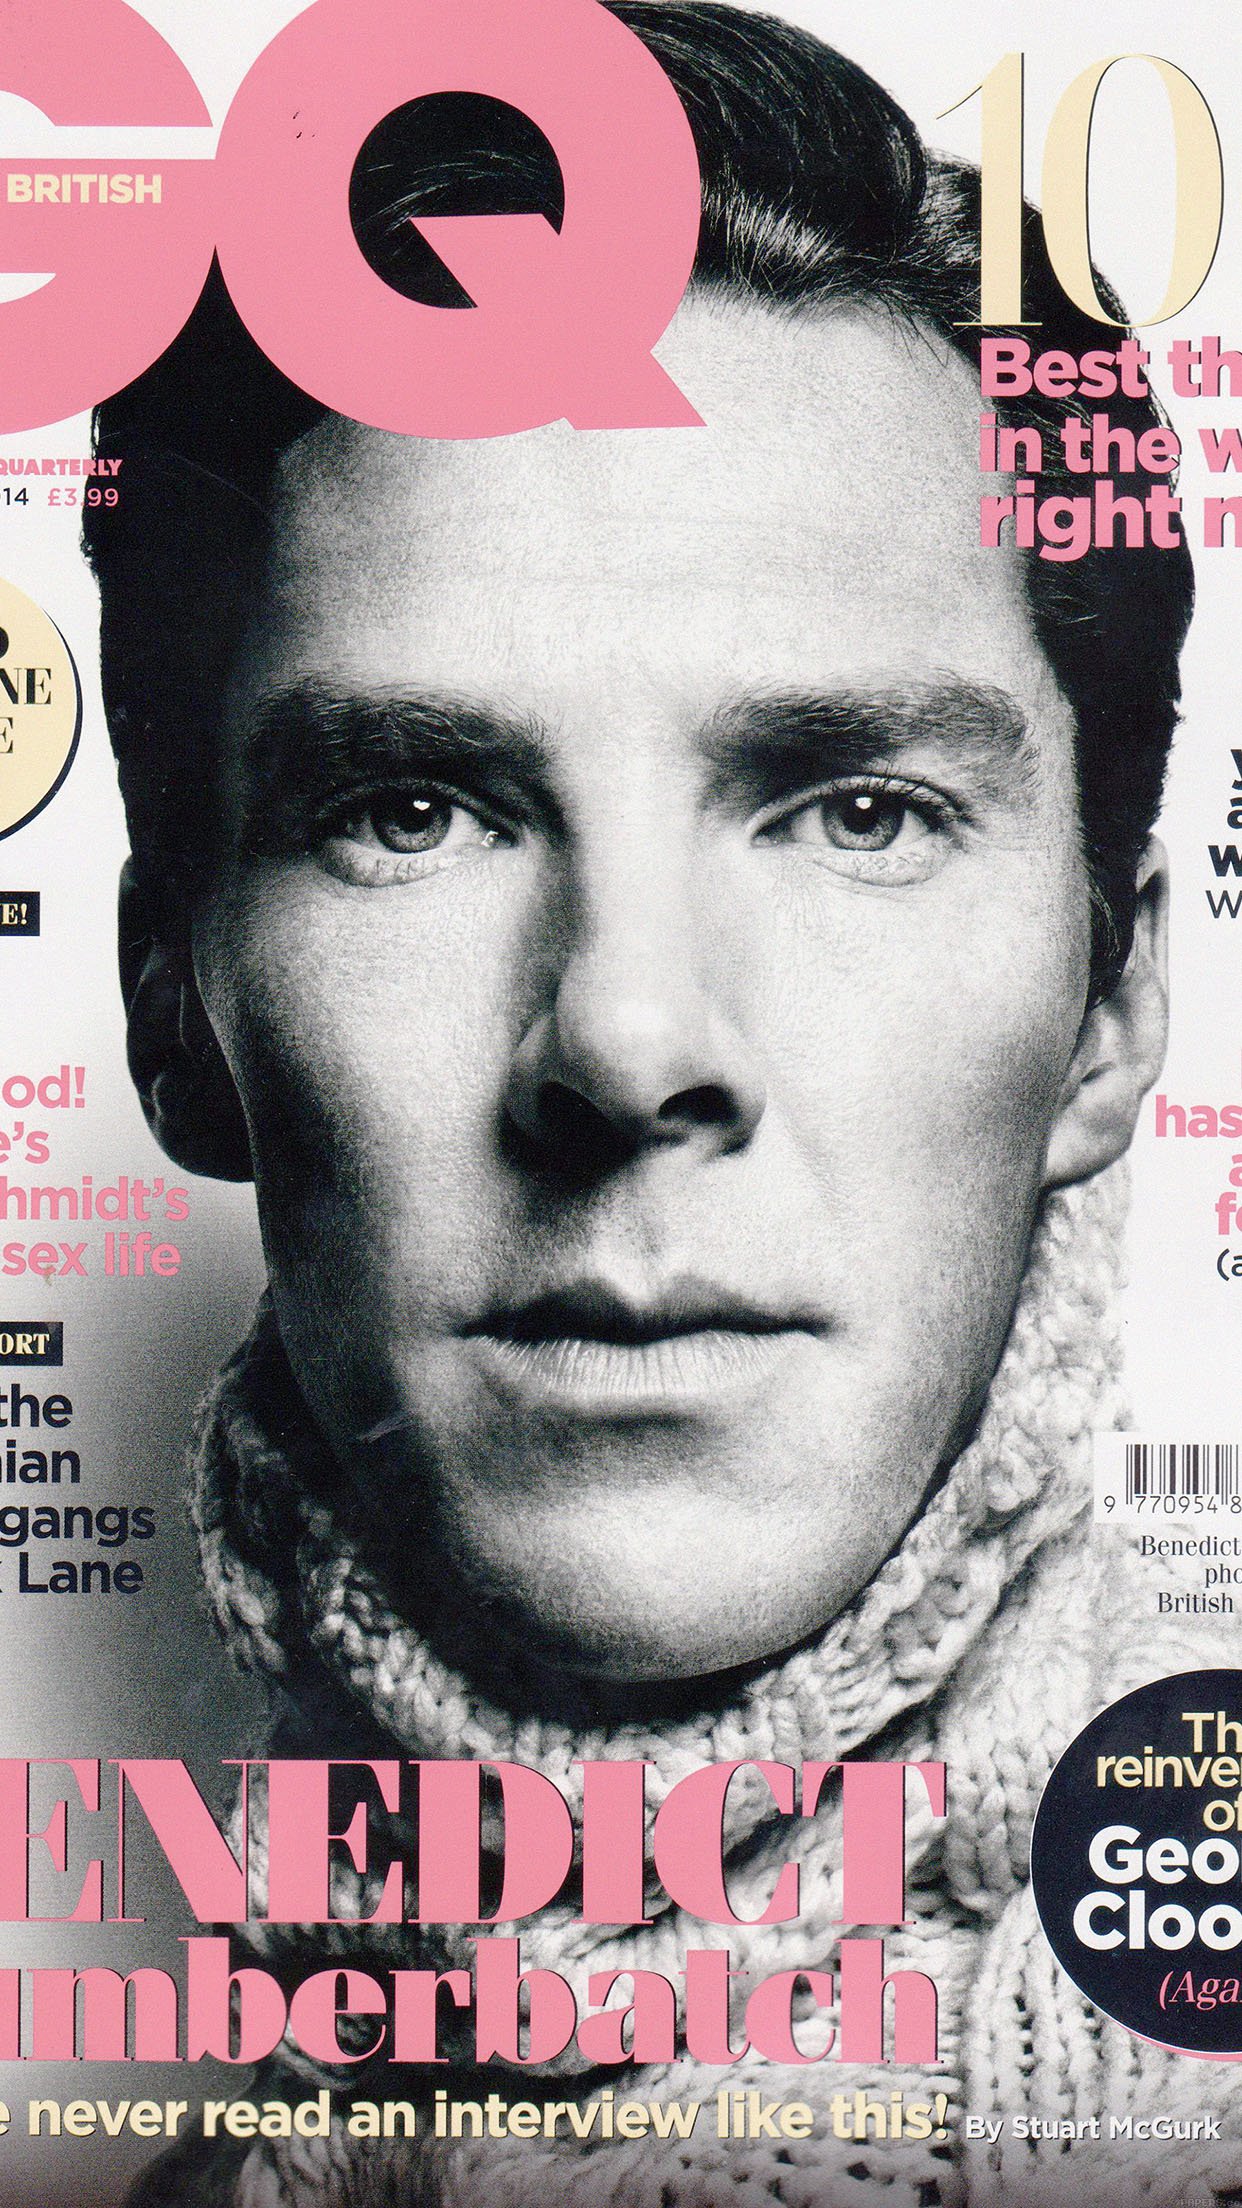 Wallpaper Gq Benedict Cumberbatch Face Film Android wallpaper